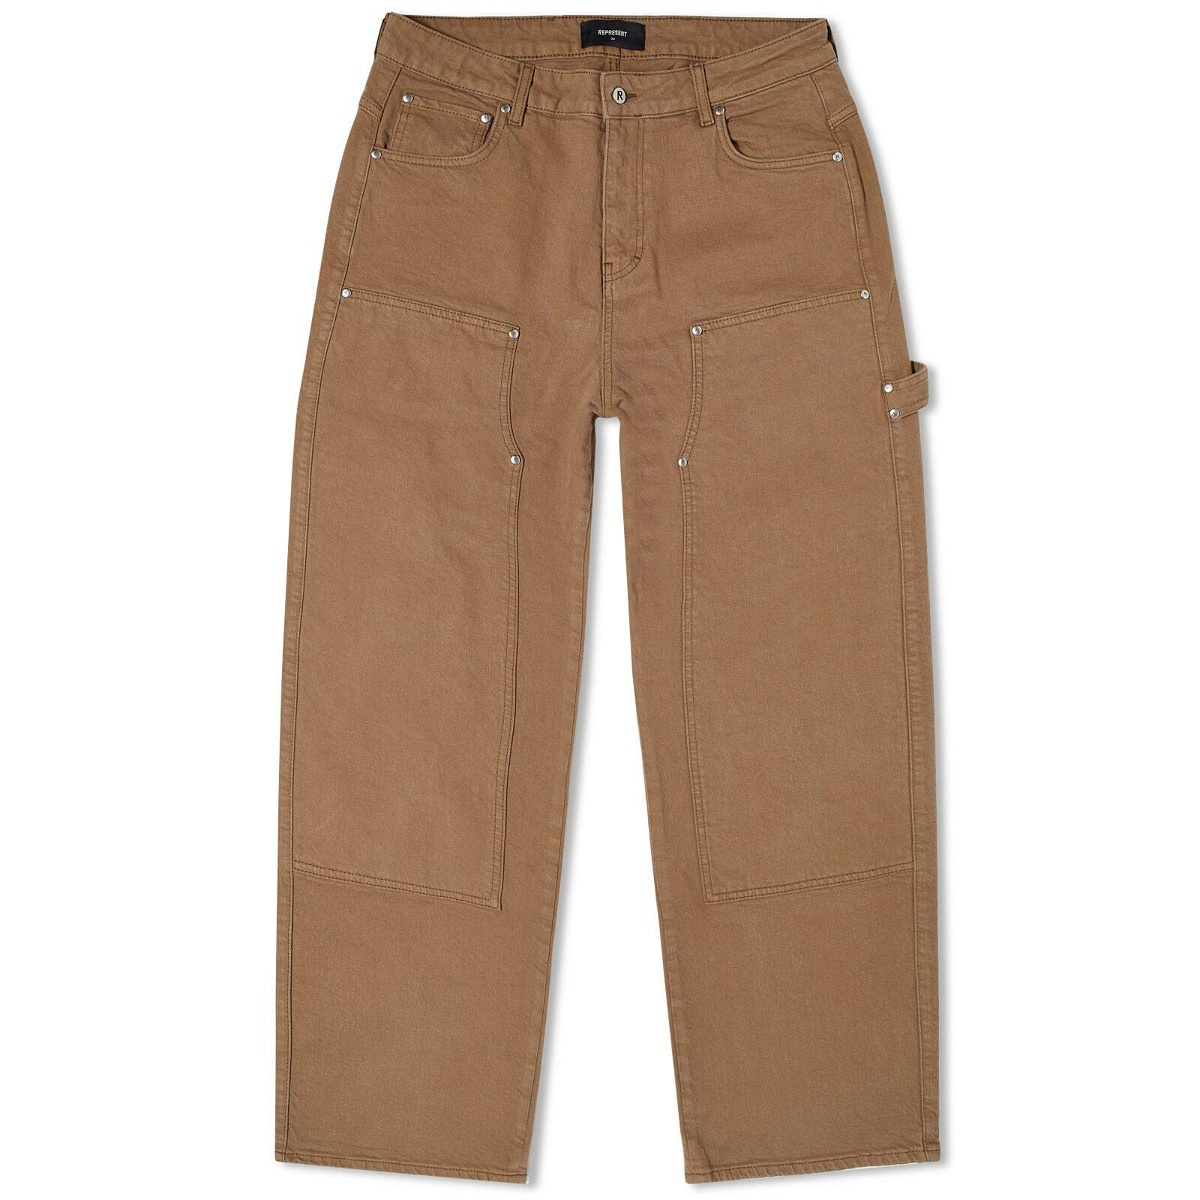 Represent Men's Carpenter Denim Jeans in Hazel Represent